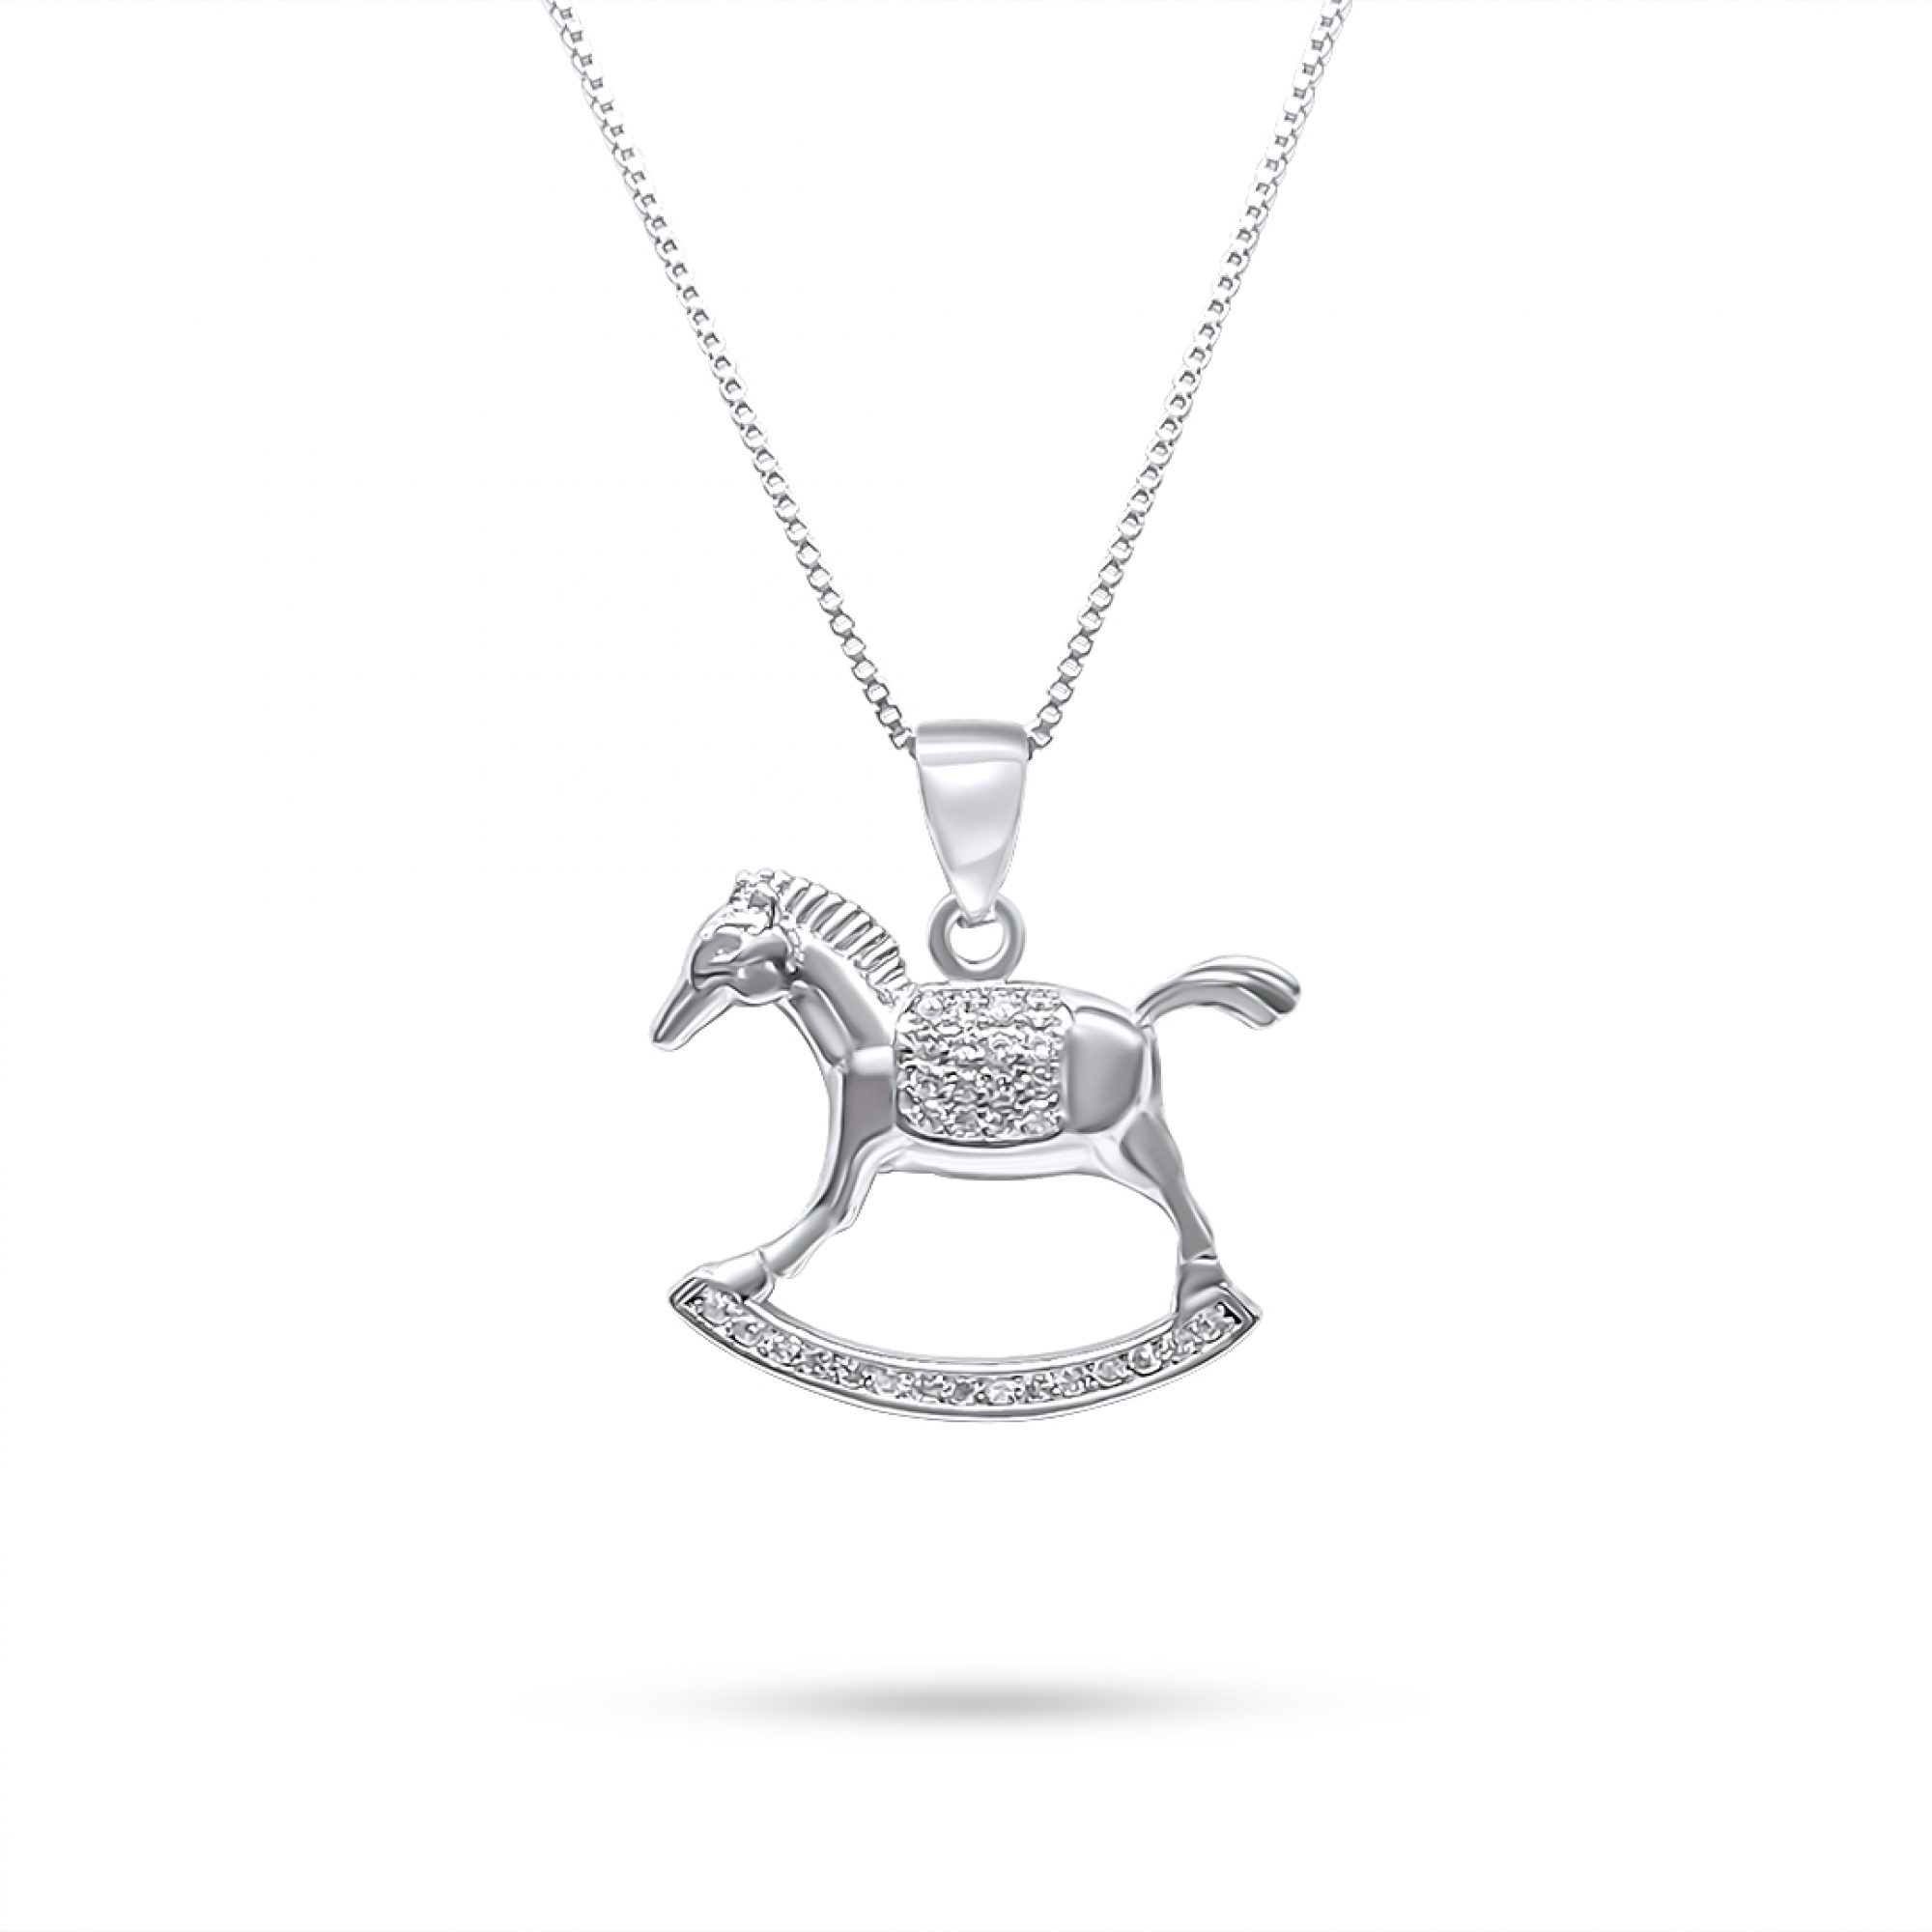 Rocking horse necklace with zircon stones